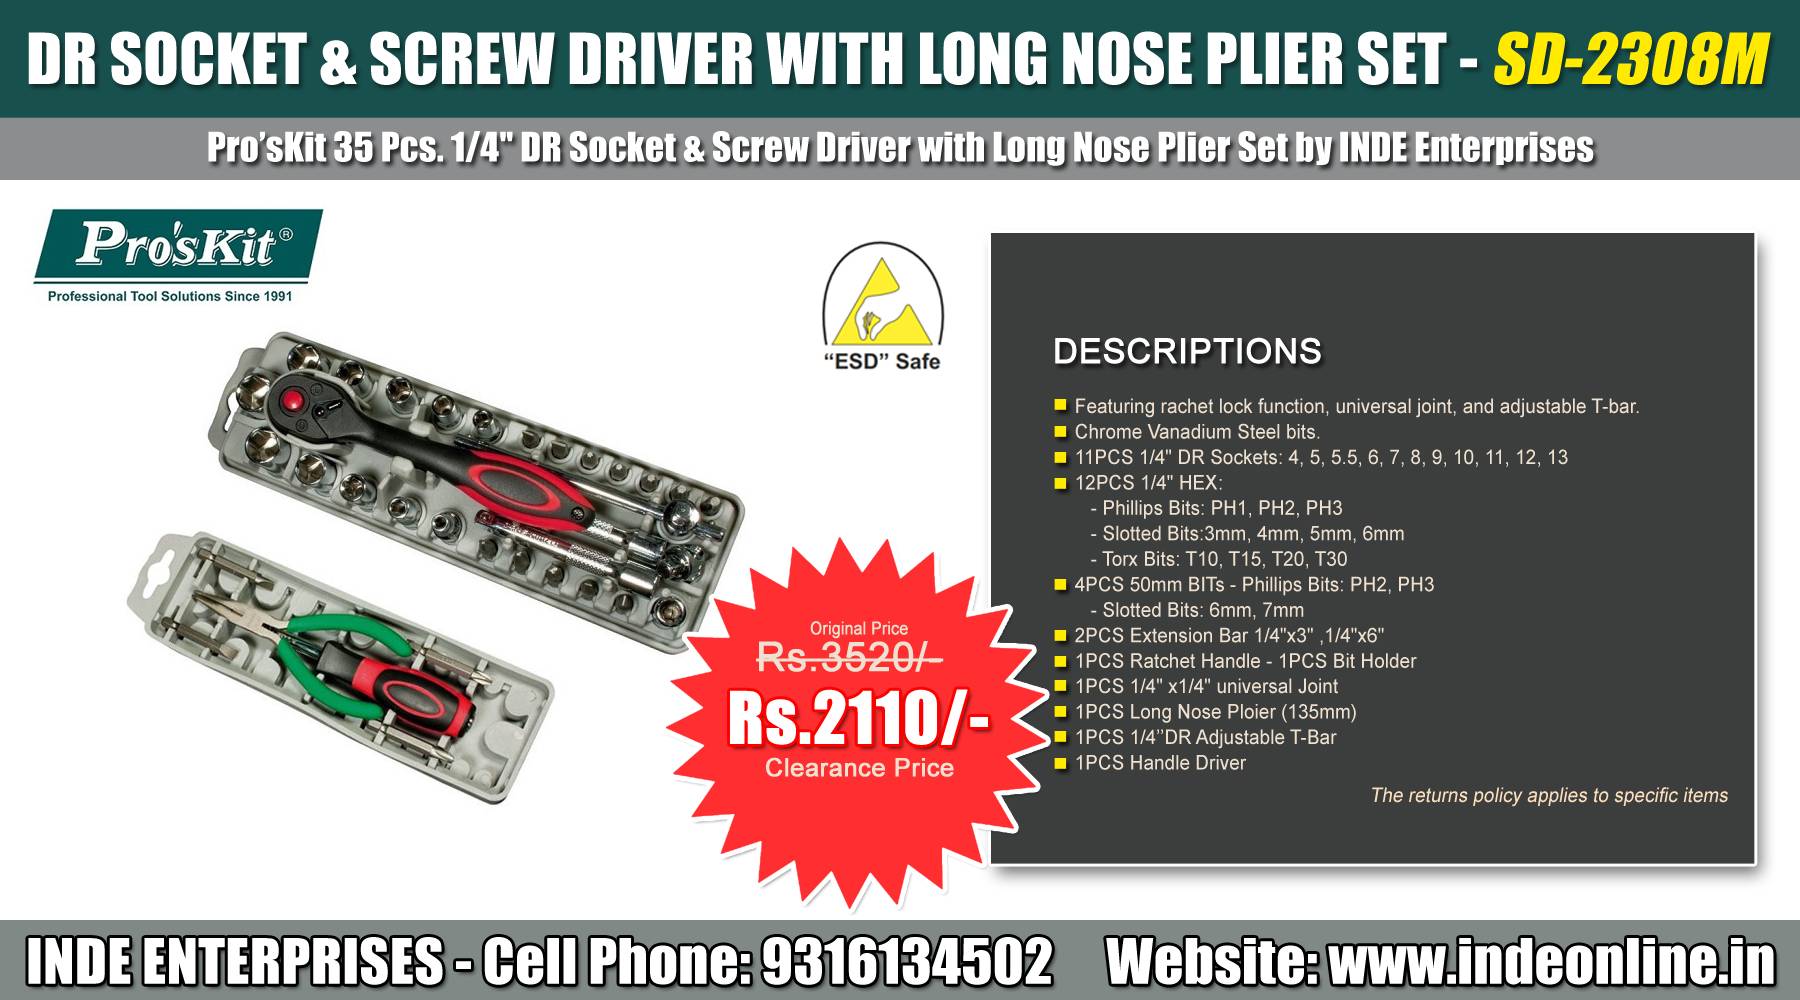 Proskit SD-2308M Socket & Screw Driver Set Price Rs.2110/-